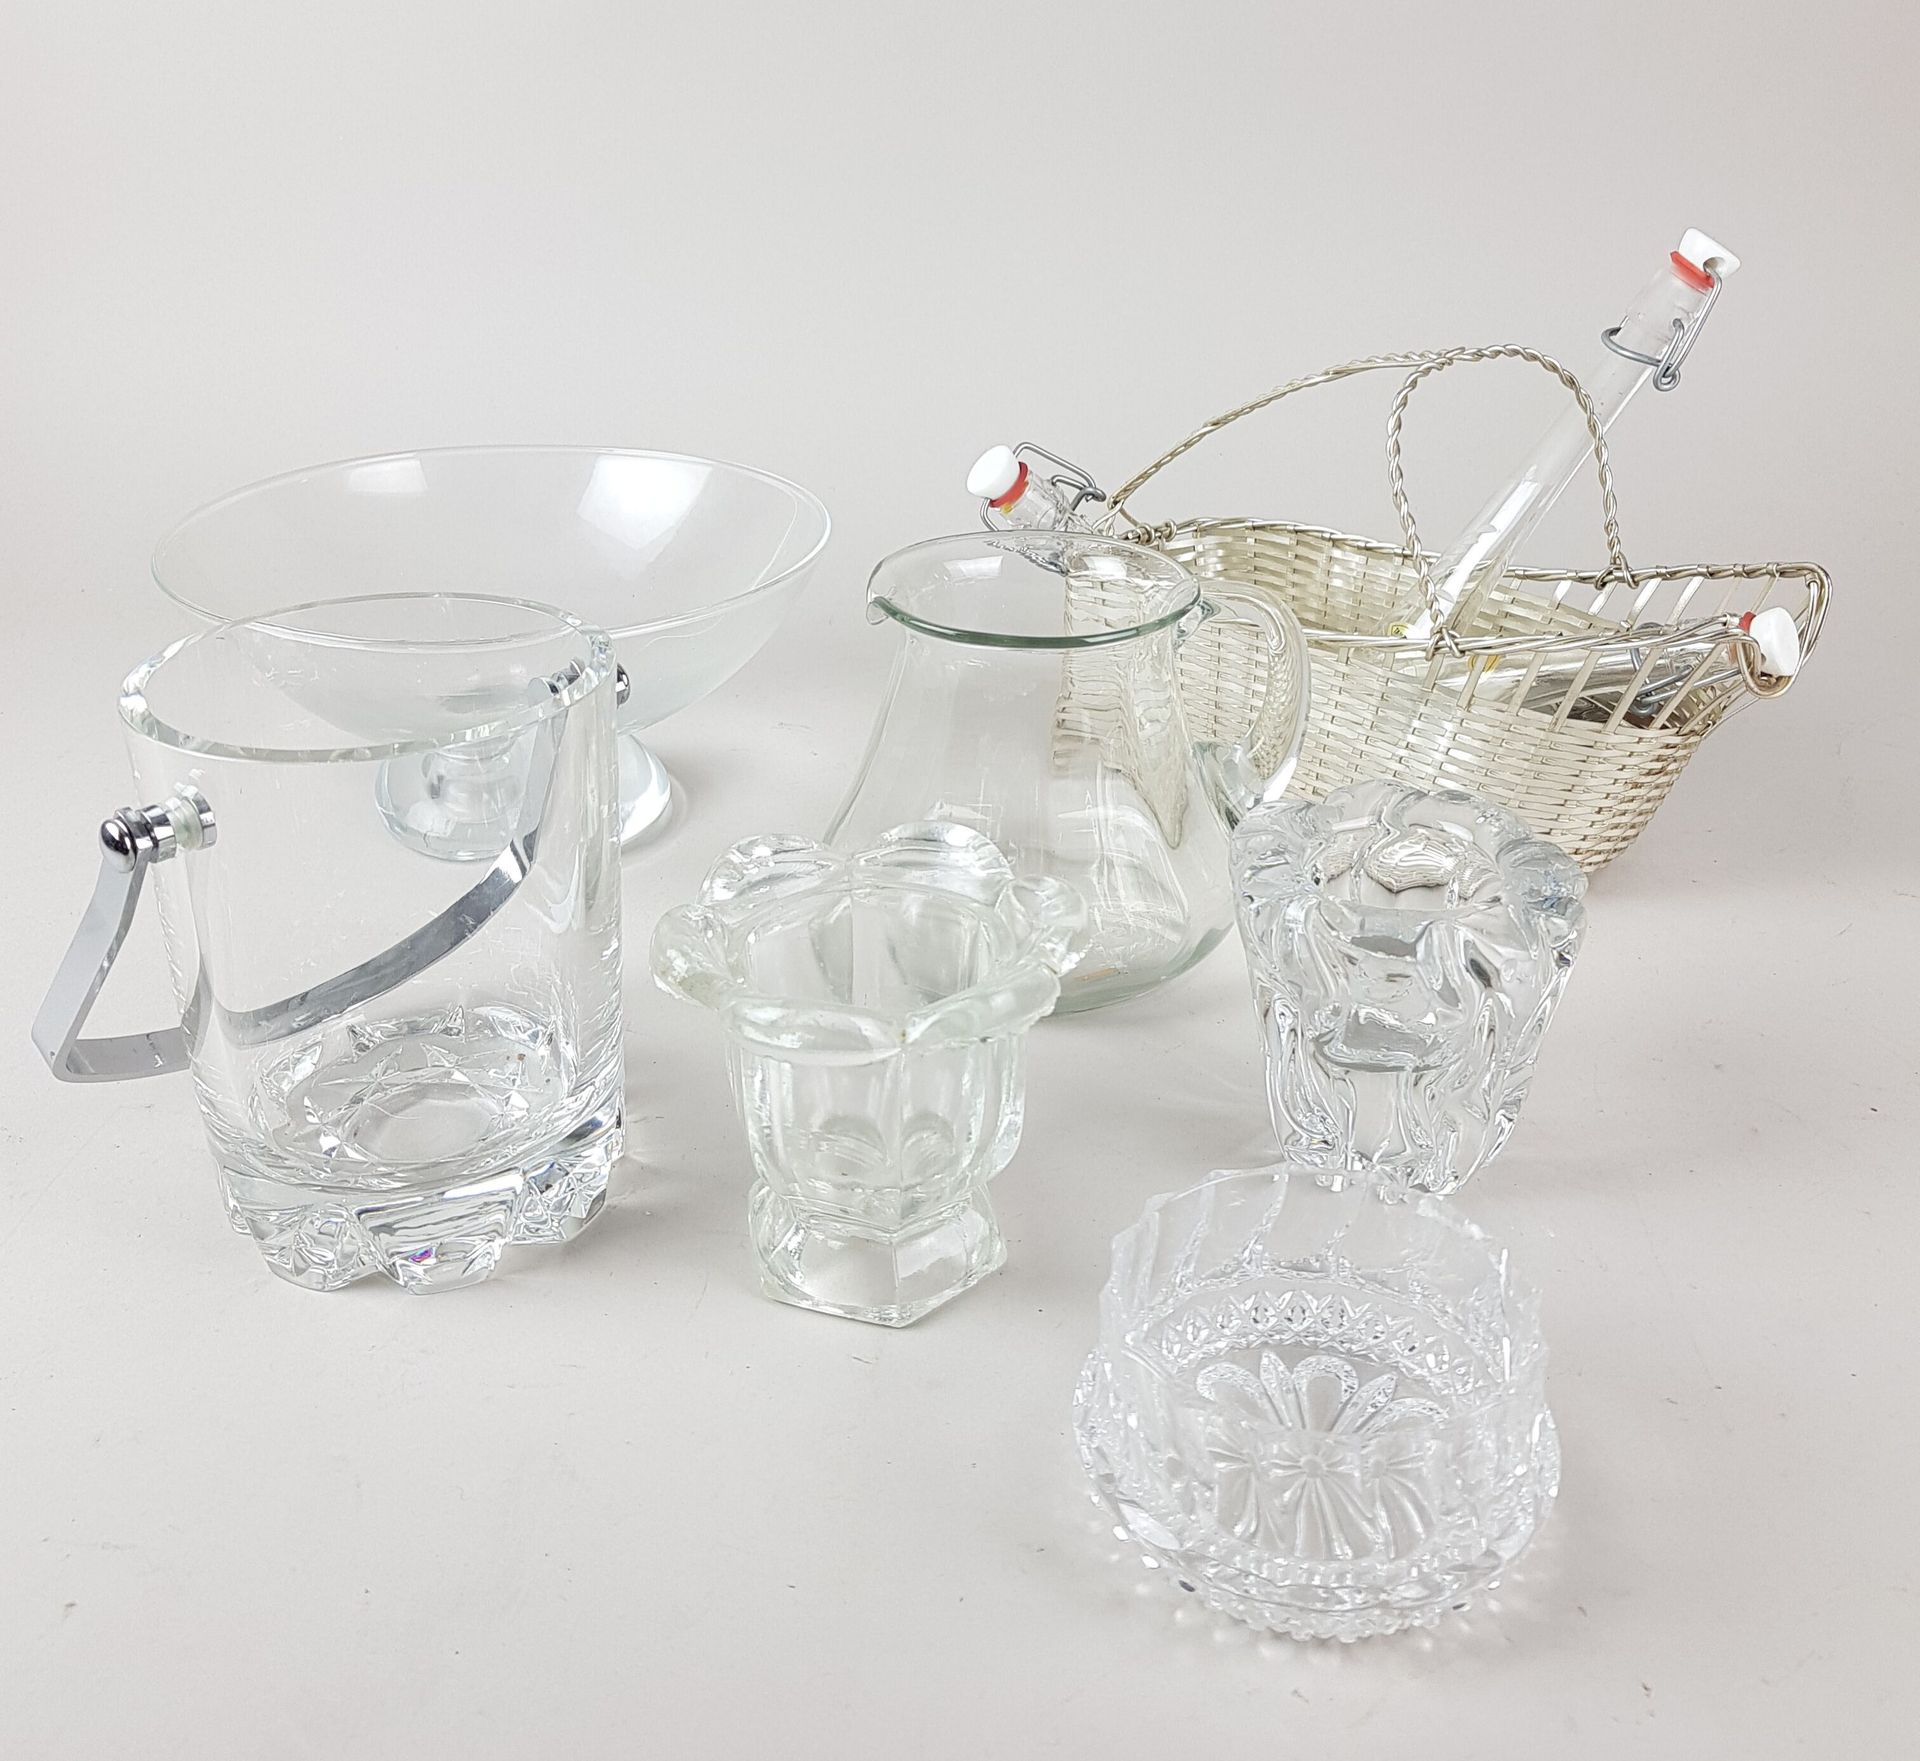 Null LOT of glassware including ice bucket, cup, jug, metal basket - wear and te&hellip;